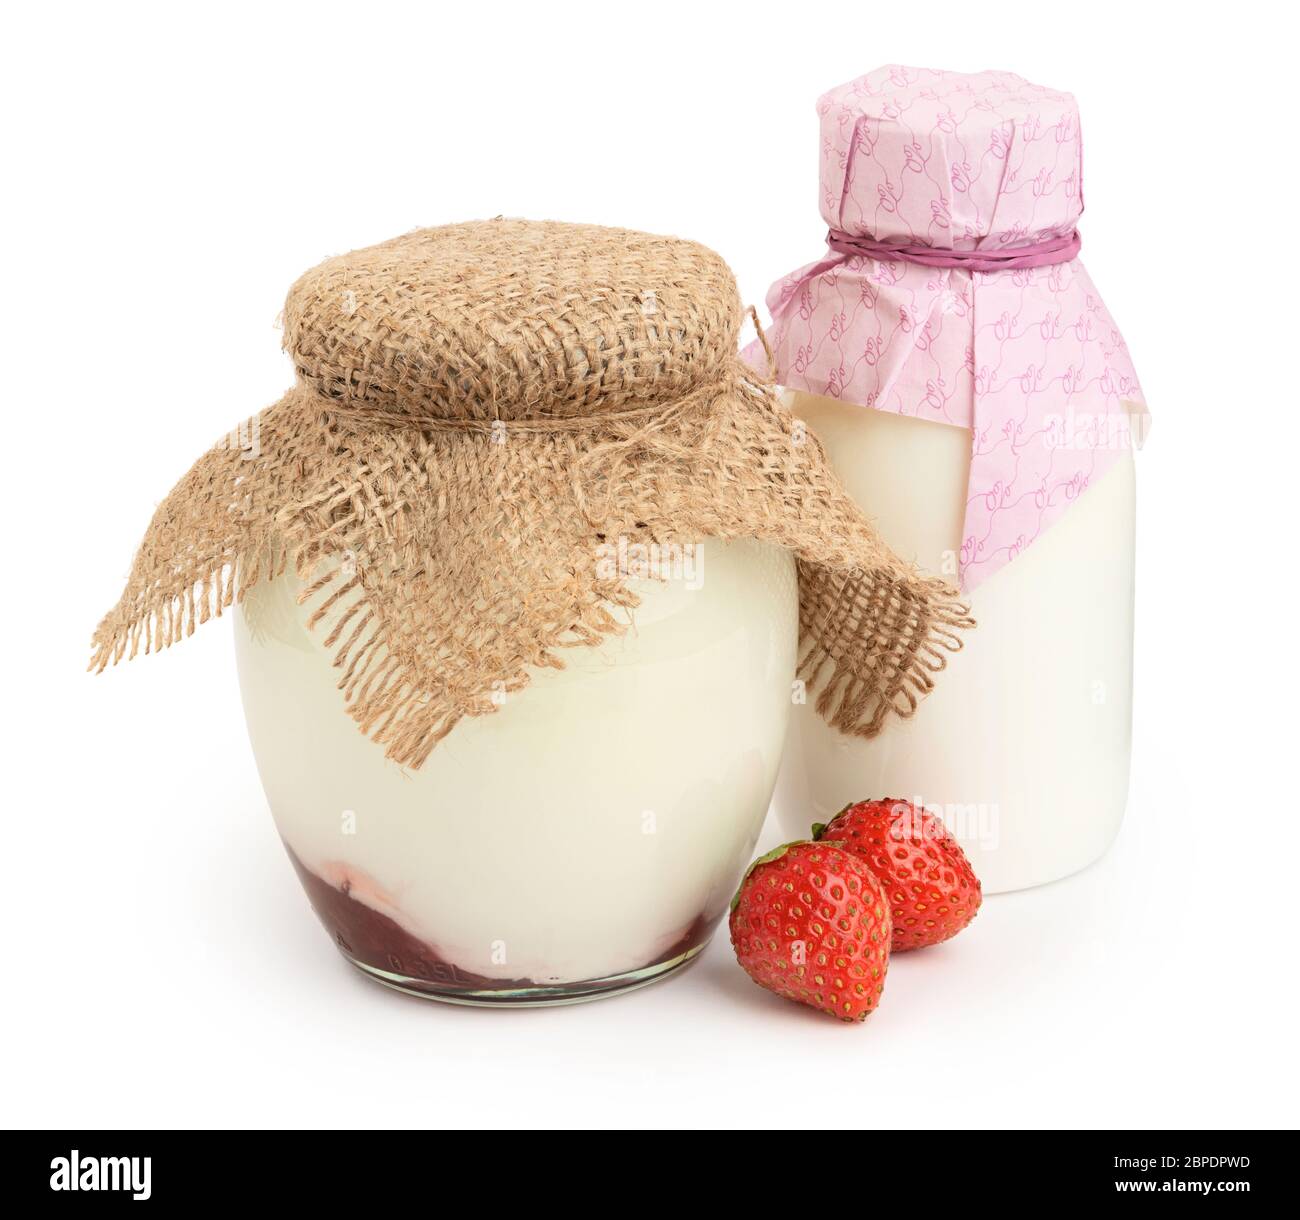 White and strawberry yogurts in glass jars Stock Photo